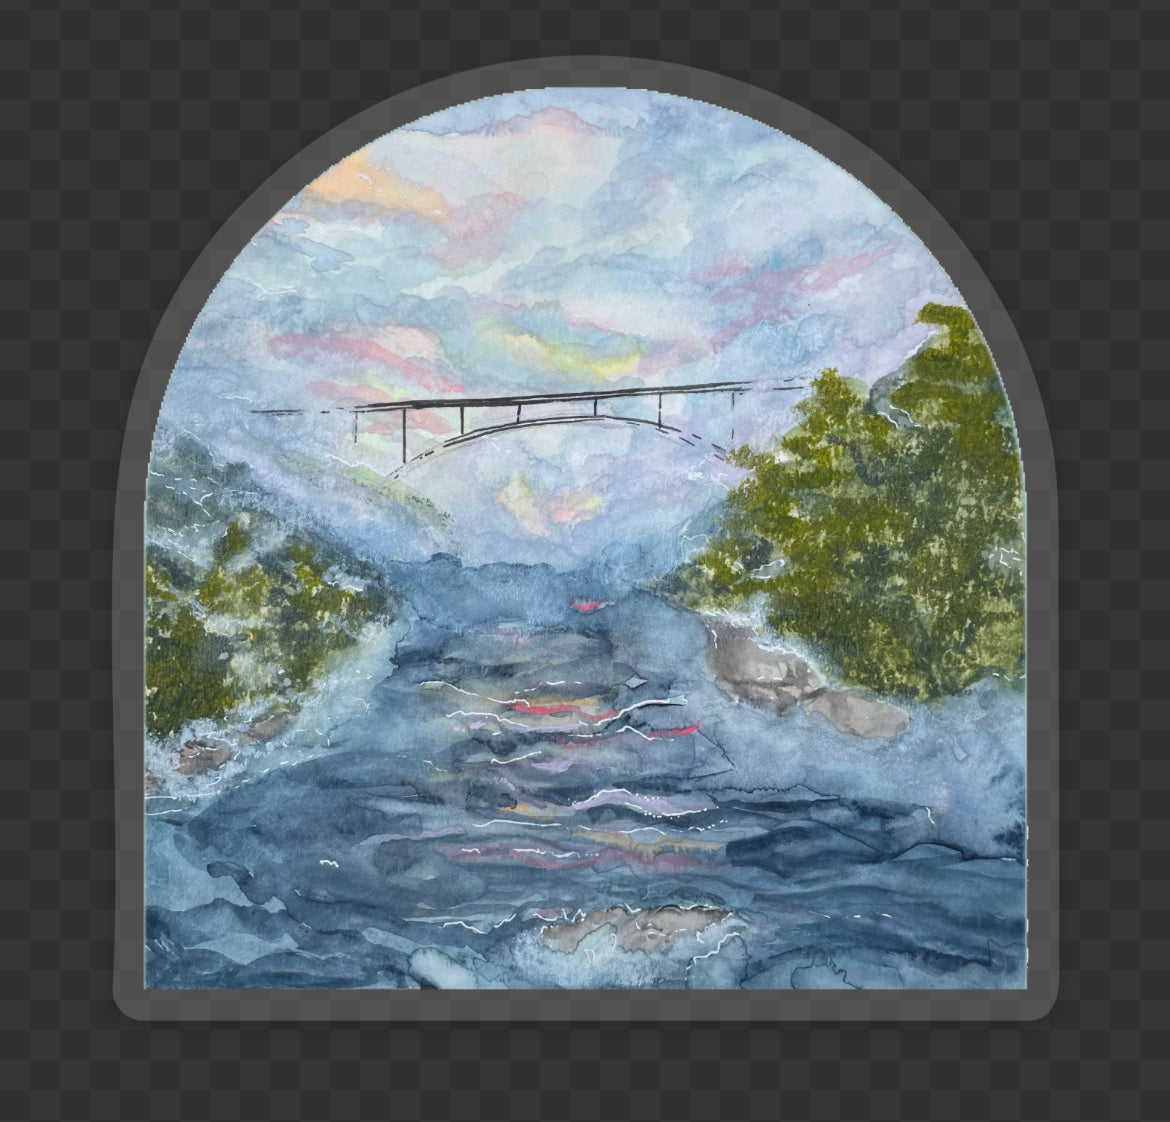 Artwork Watercolor Fog at New River Gorge Bridge WV Vinyl waterproof sticker decal